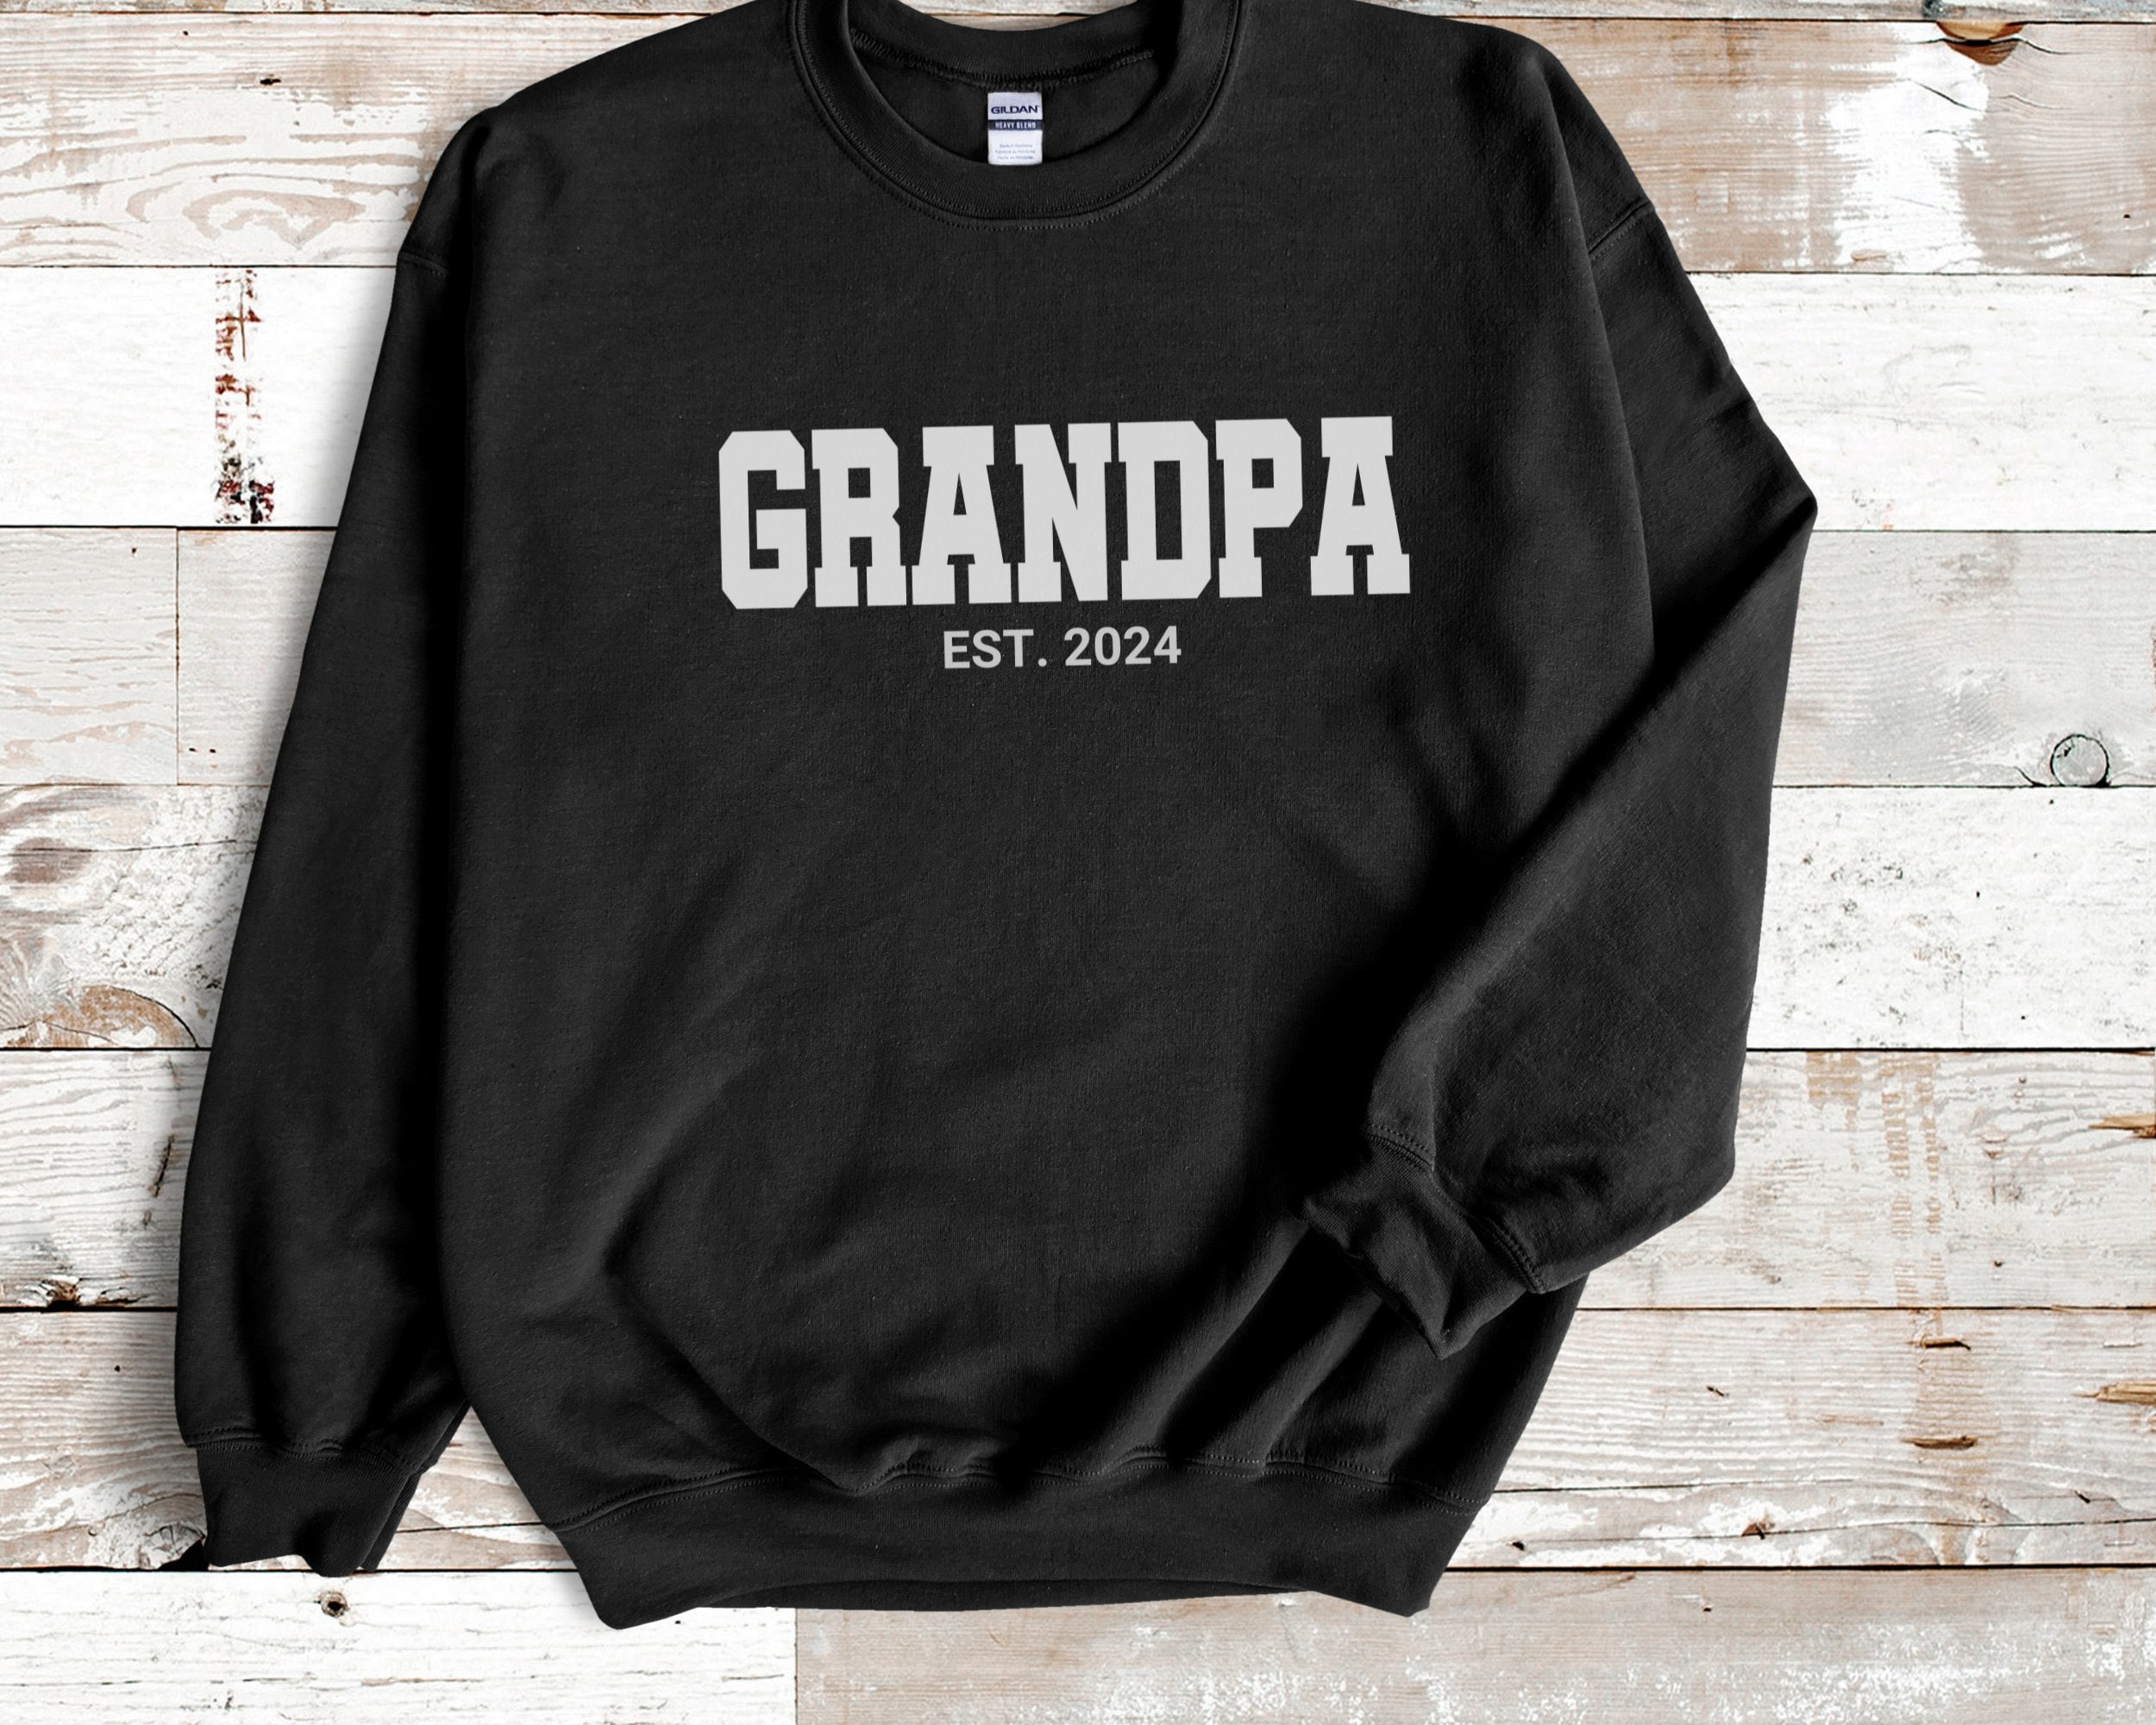 Grandpa EST 2024 Sweatshirt, Gift for Grandpa, Grandpa Shirt, Grandpa Gift, New Grandpa Gift, Papa Gift, Father’s Day Gift, Pregnancy Reveal 2